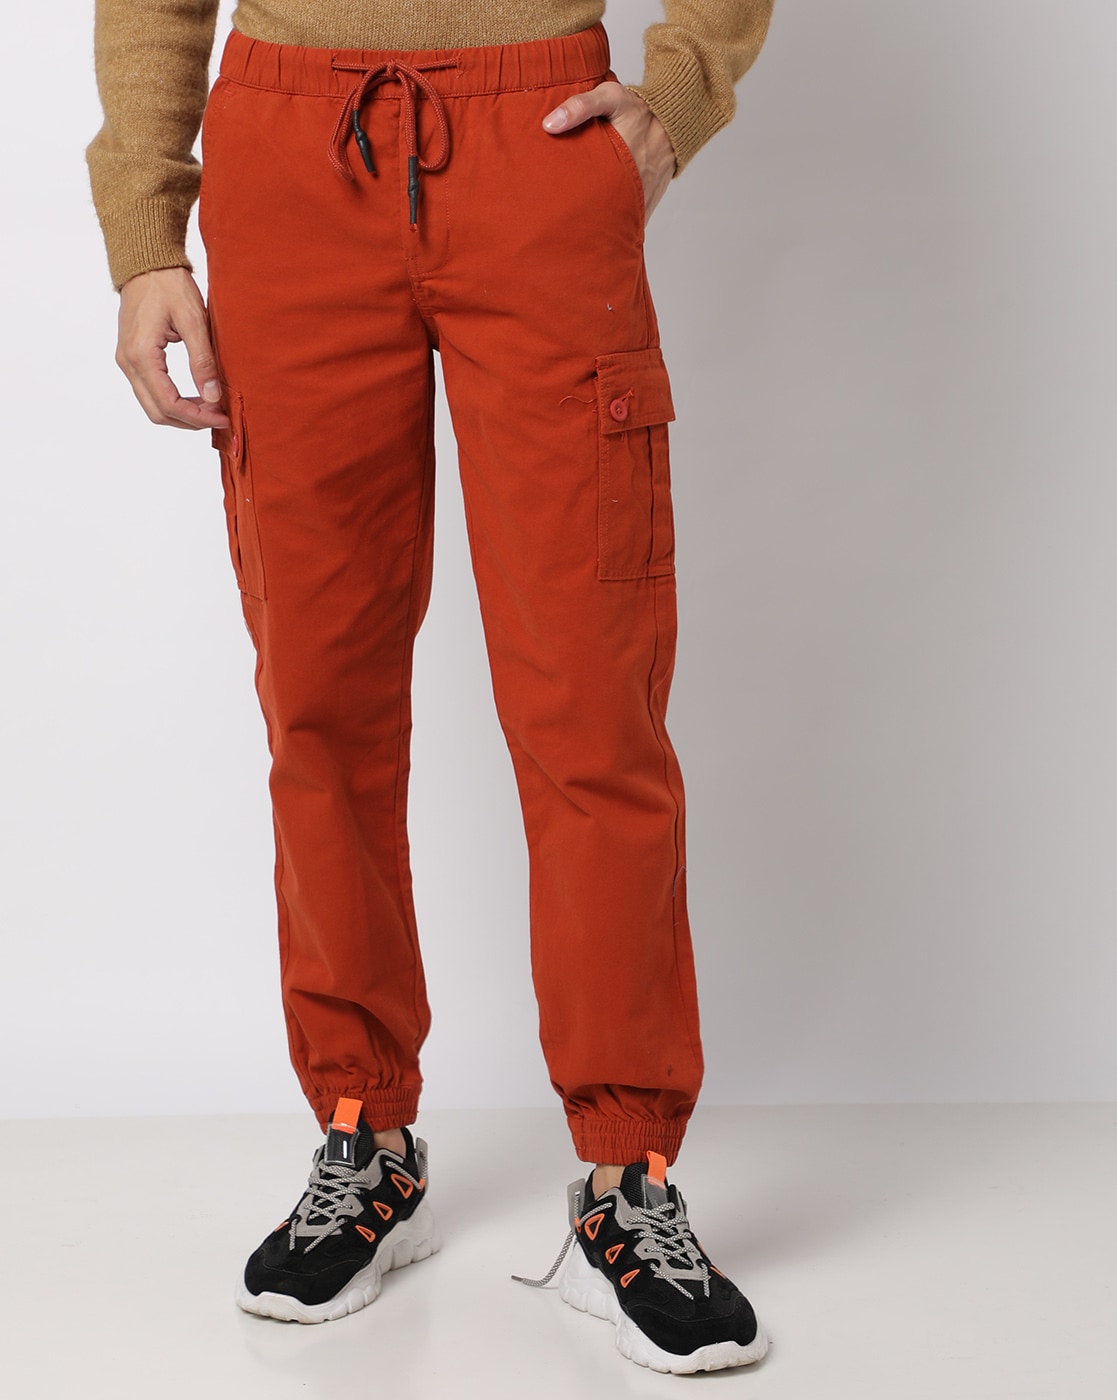 Women's Elastic High Waist Flap Pocket Cargo Pants Orange - Walmart.com